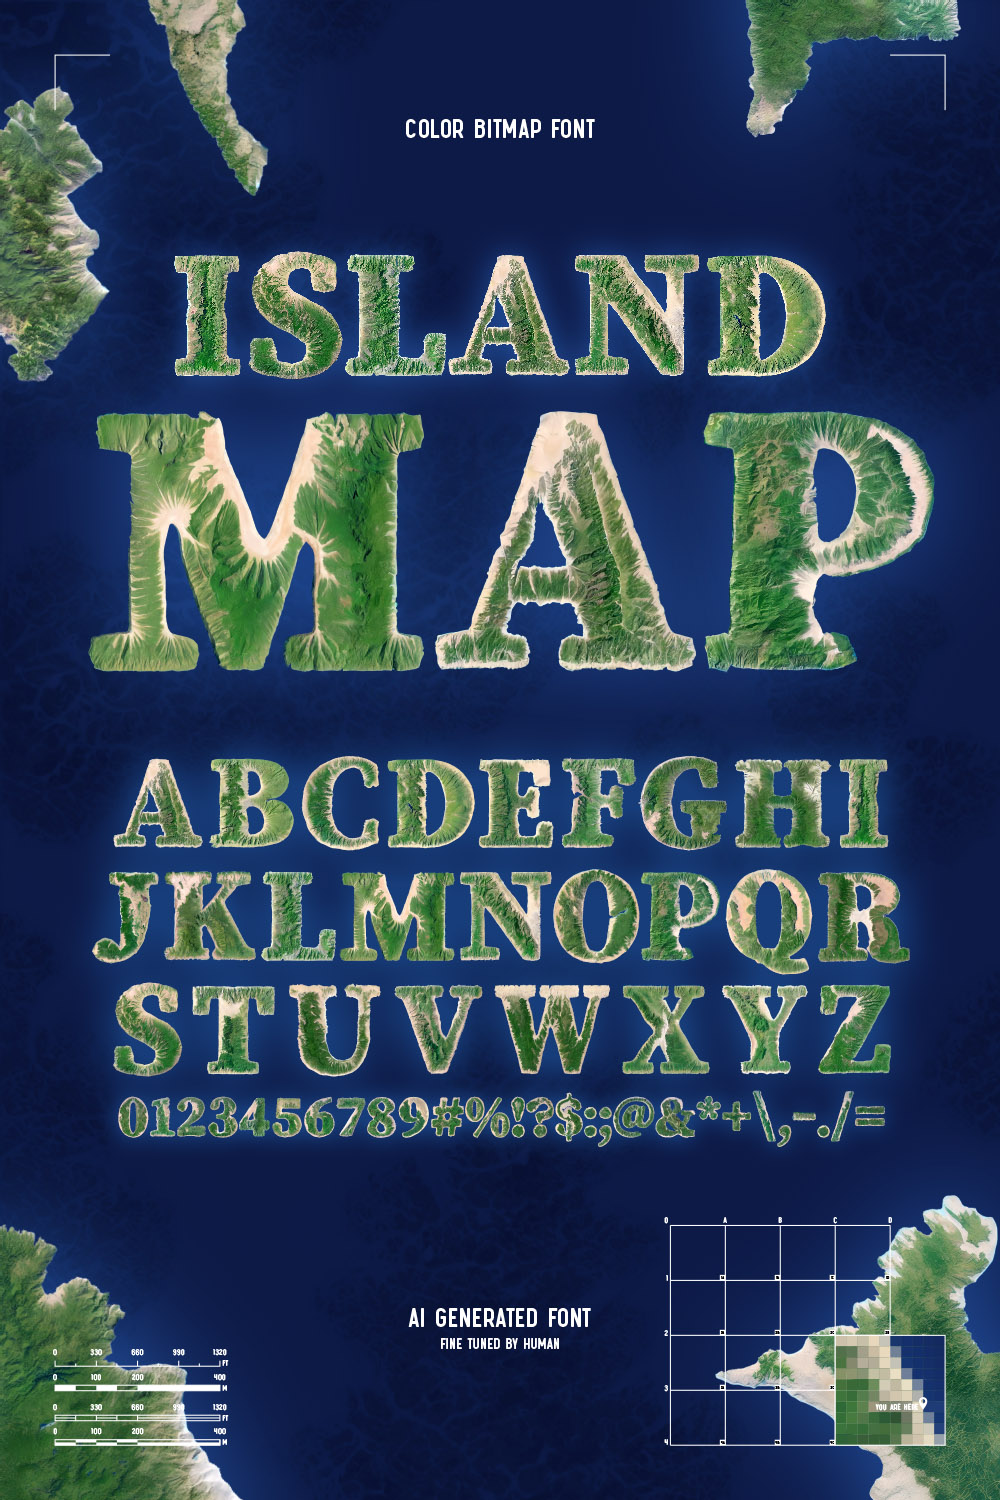 Island Map - Color Bitmap Font pinterest preview image.